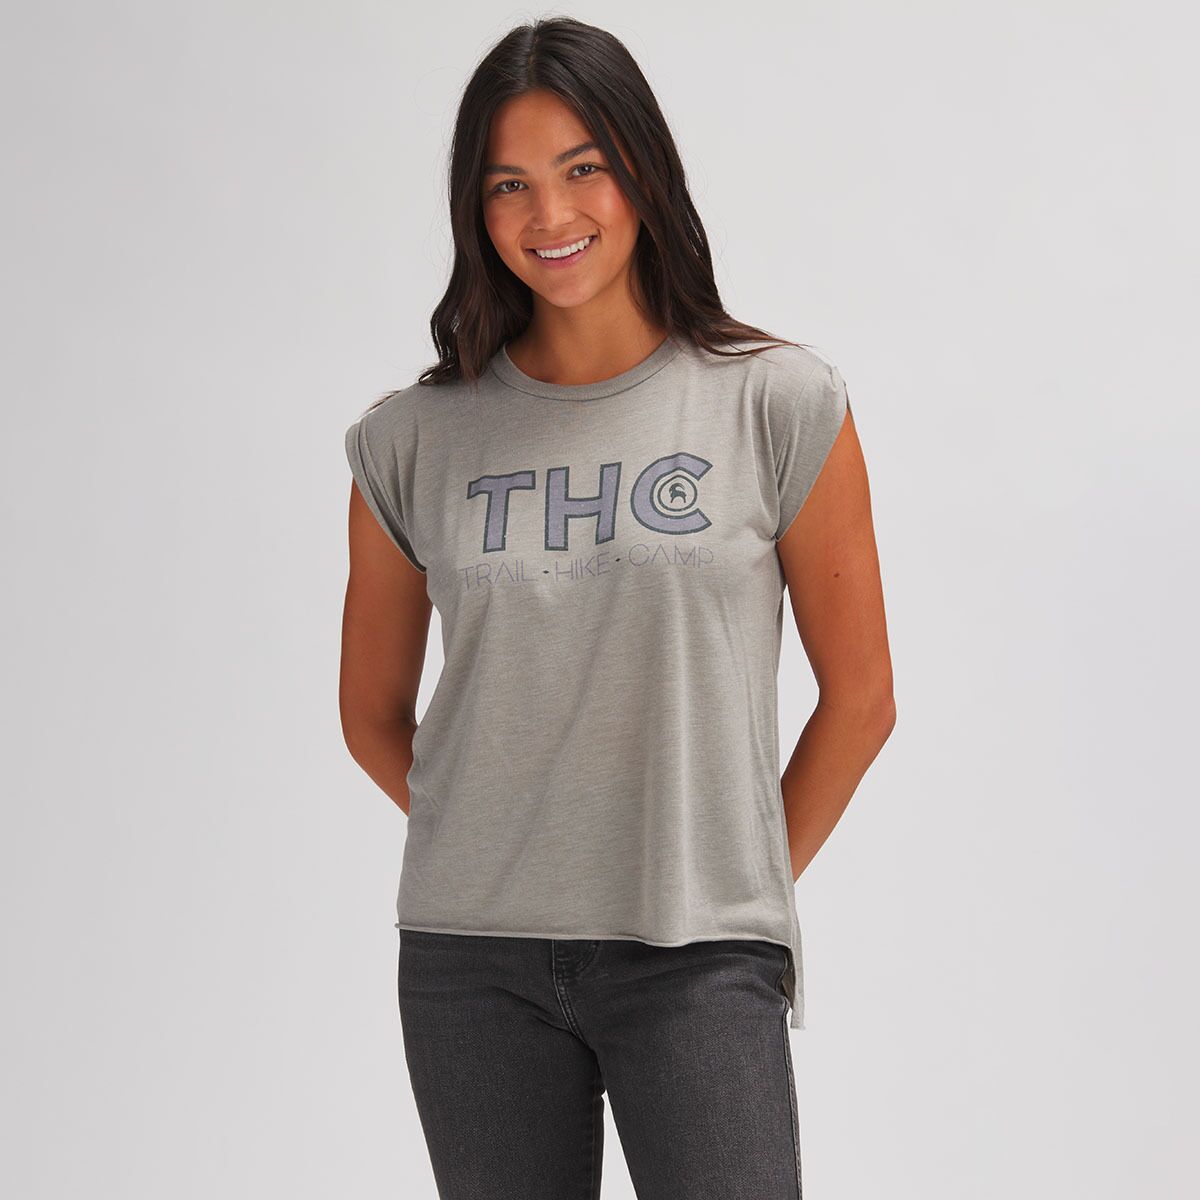 Backcountry THC T-Shirt - Women's